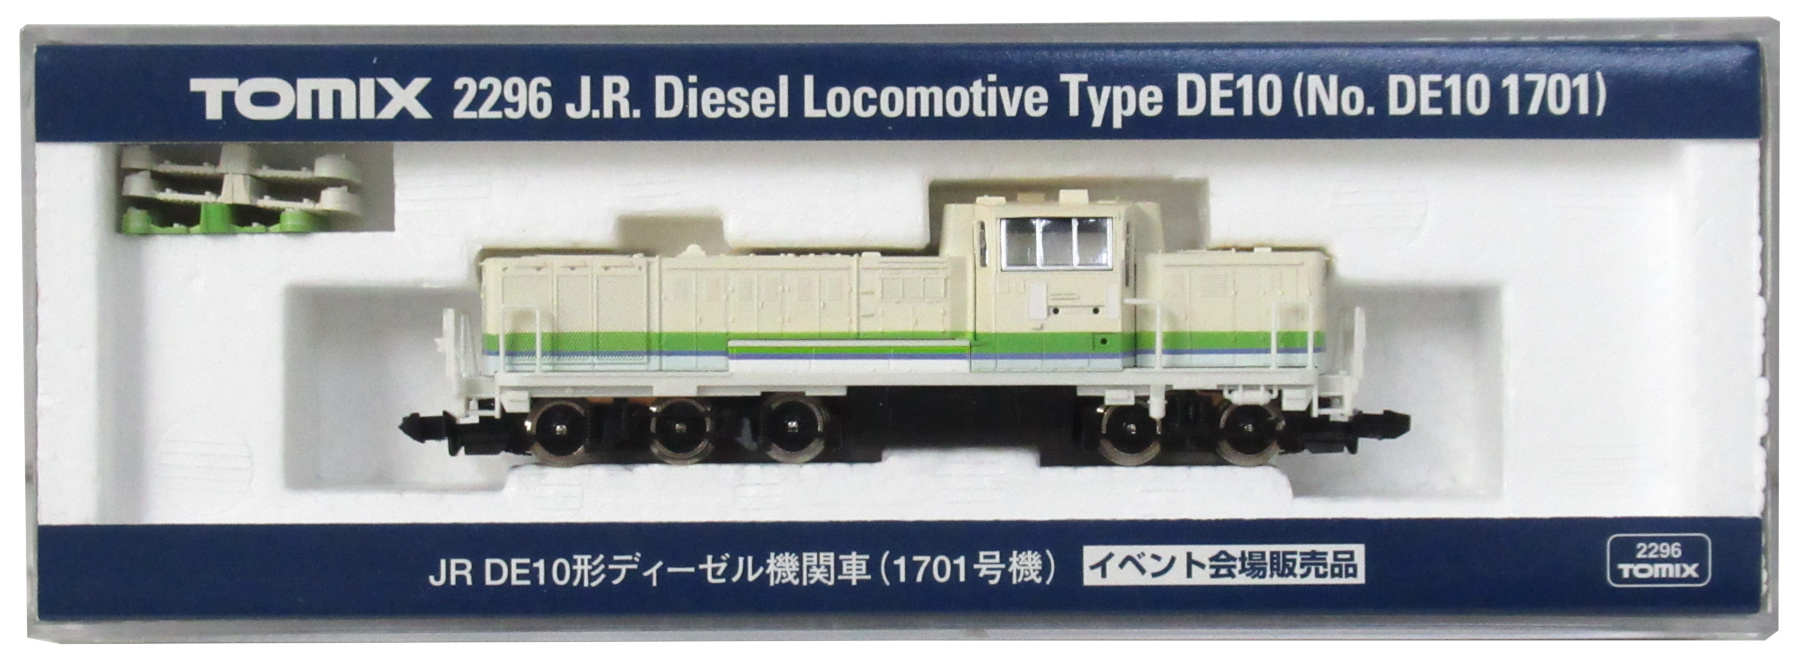 公式]鉄道模型(2296JR DE10形ディーゼル機関車 (1701号機))商品詳細 